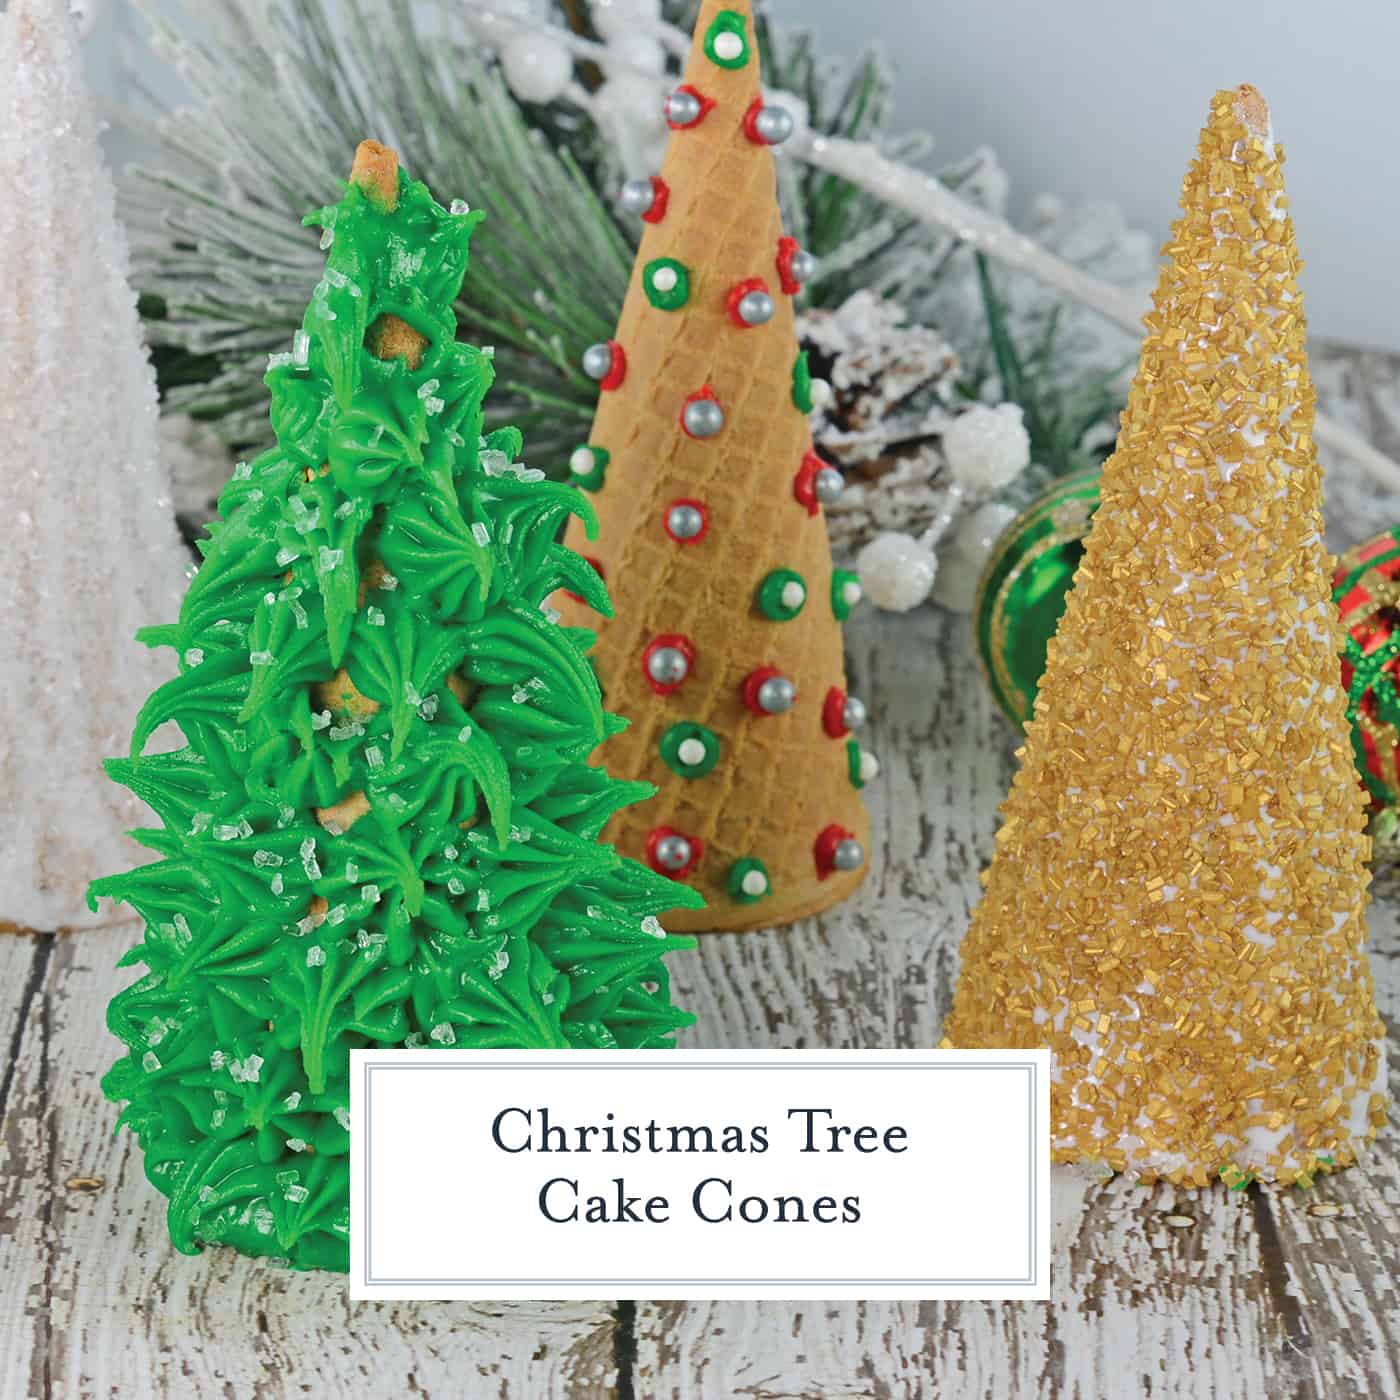 https://www.savoryexperiments.com/wp-content/uploads/2012/12/christmas-tree-cake-cones-FB.jpg